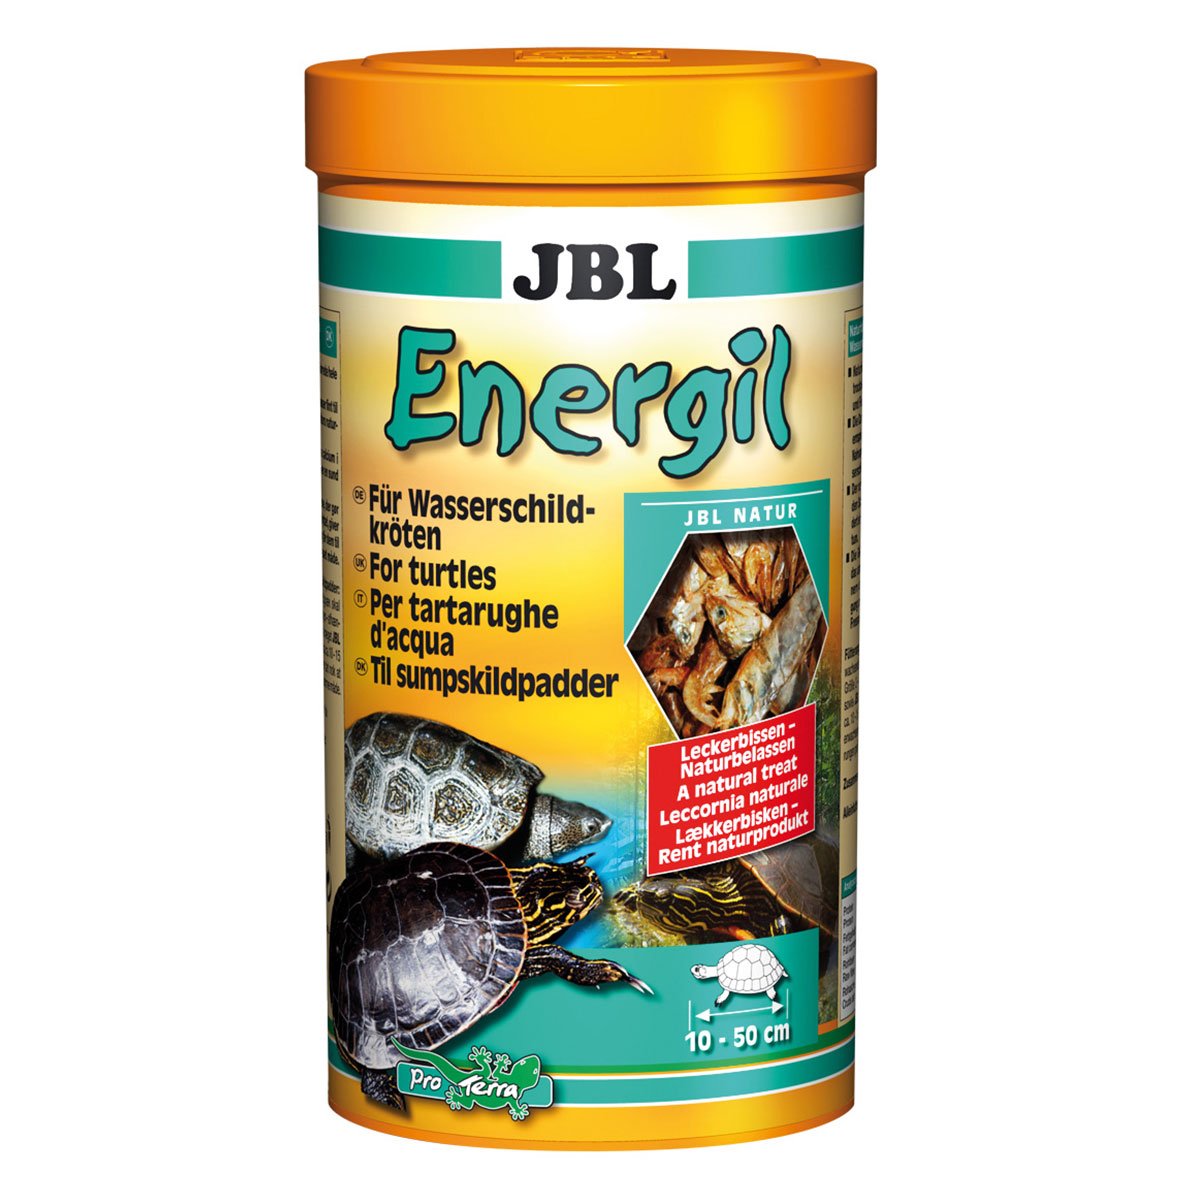 JBL Energil 1000ml